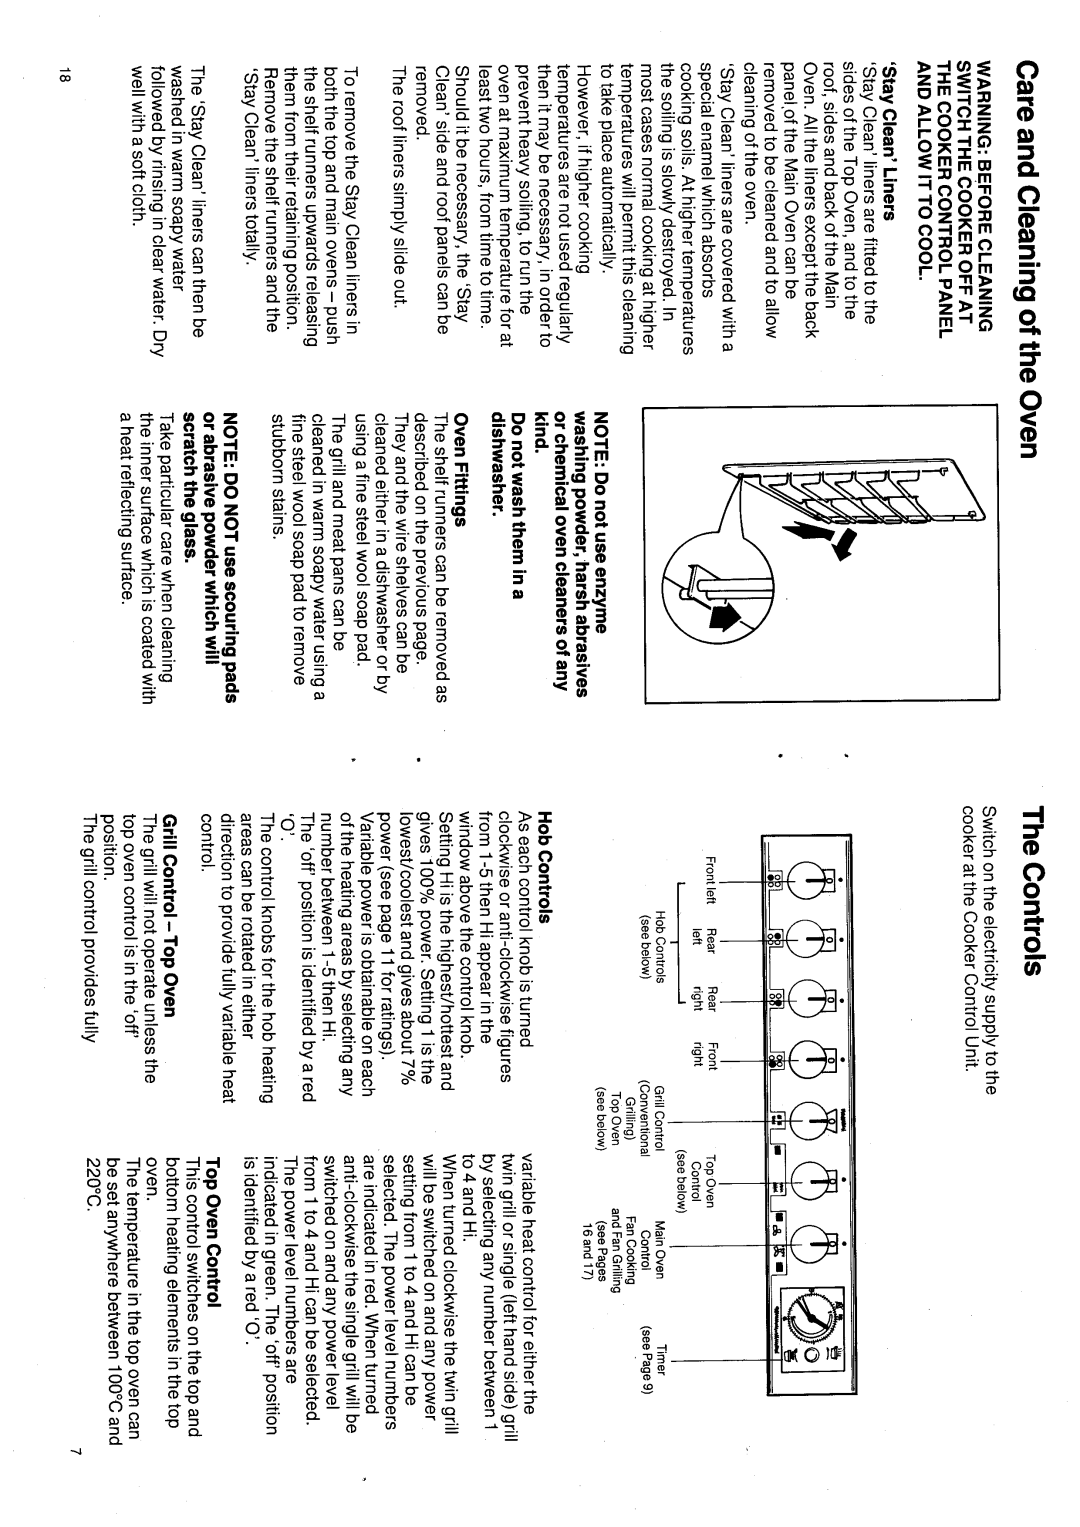 Hotpoint 6510 manual 